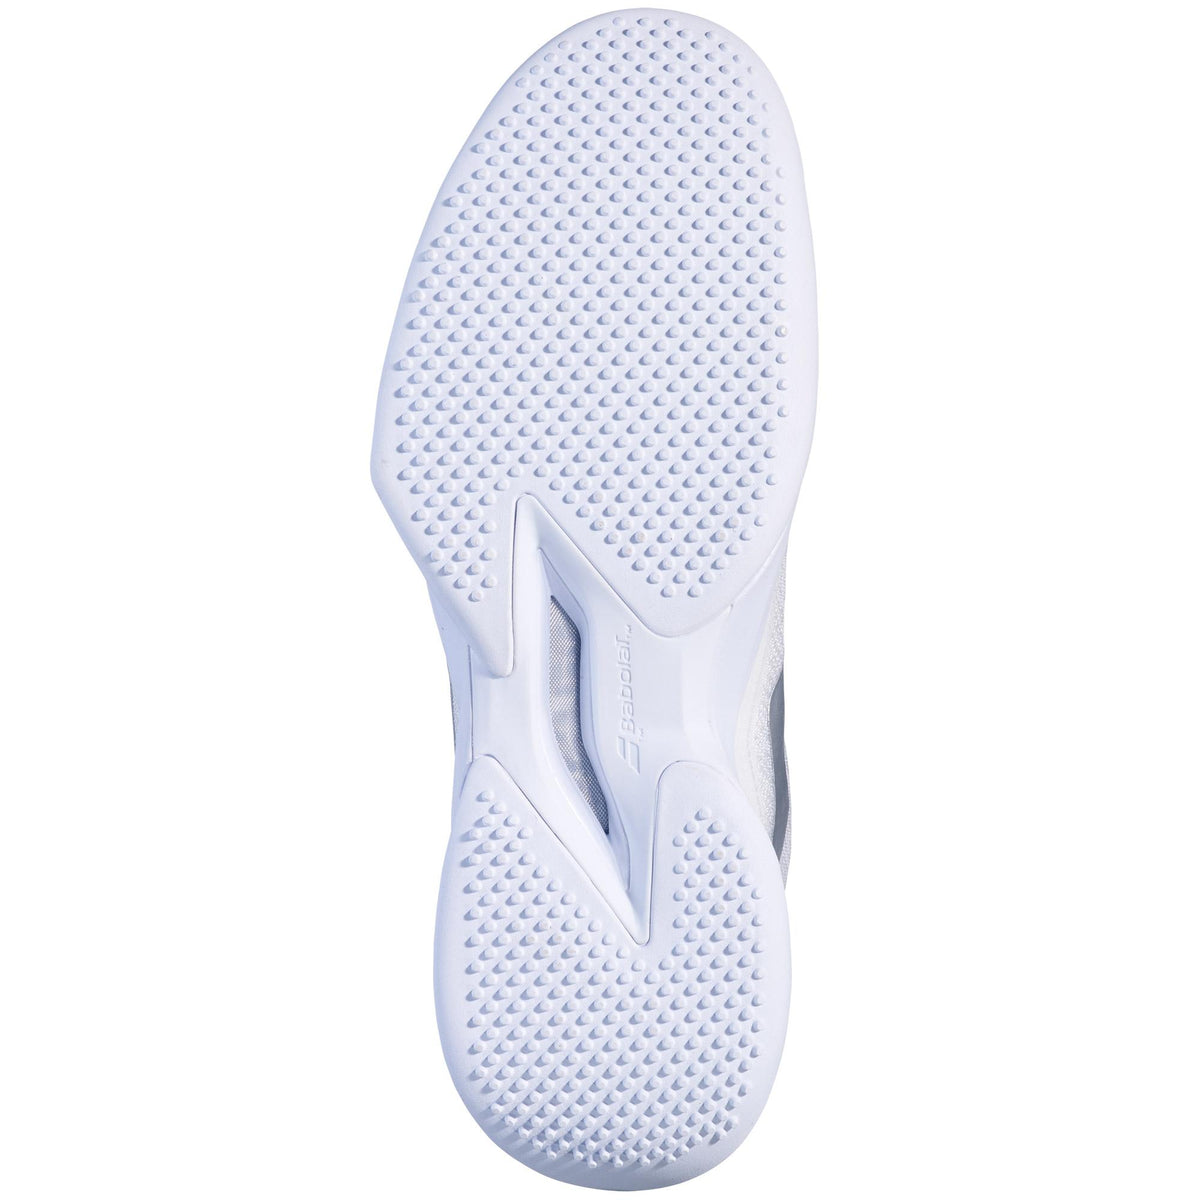 Babolat Jet Mach 3 Grass Wimbledon 31S22810 Tennis Shoes Womens (White/Silver)